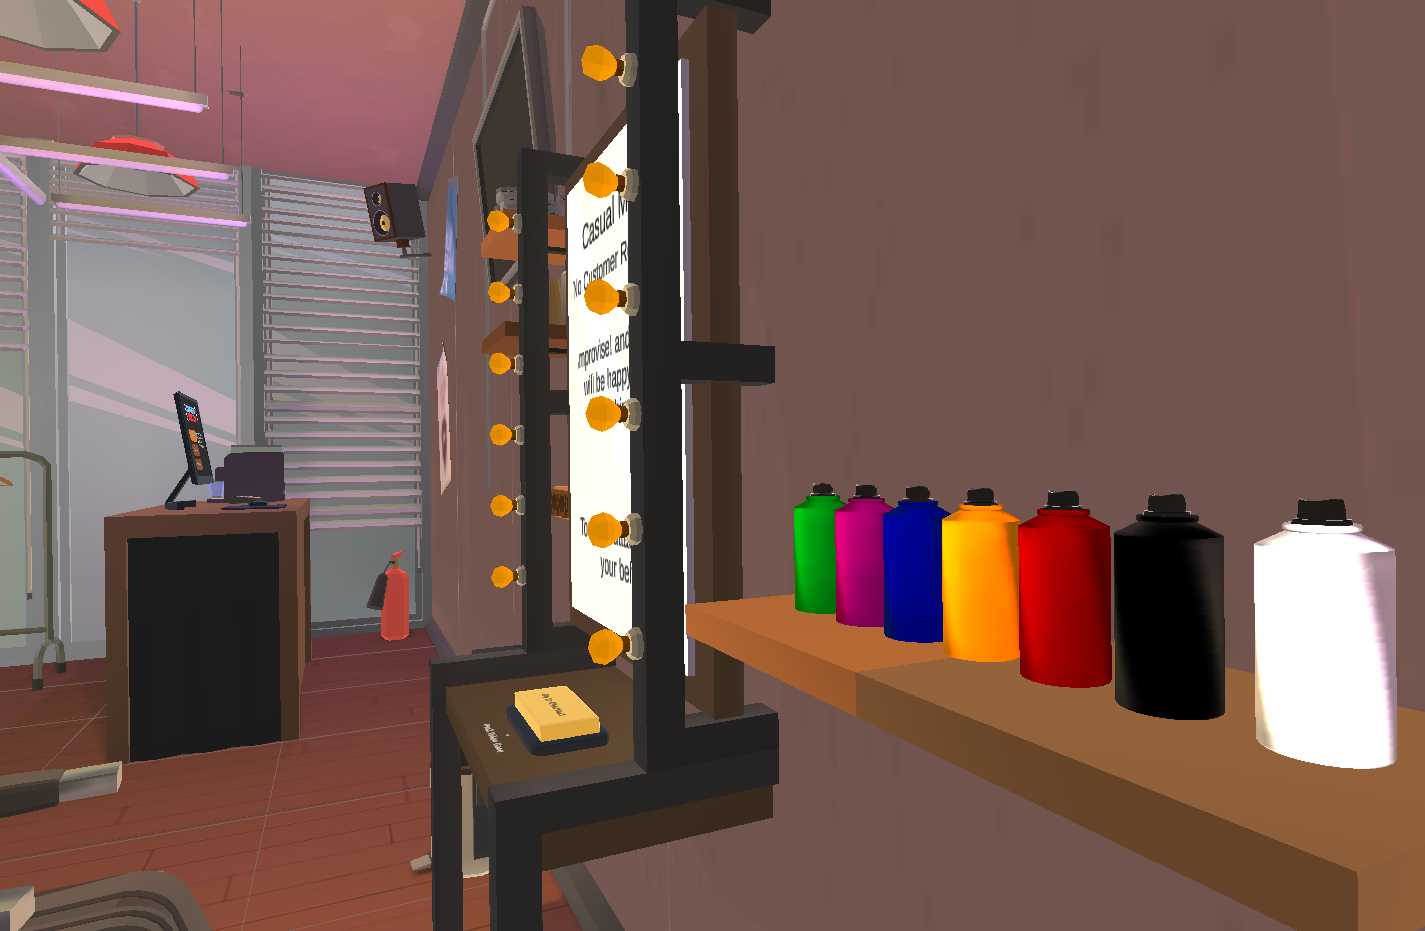 理发店模拟器（Barbershop Simulator VR）- Oculus Quest游戏